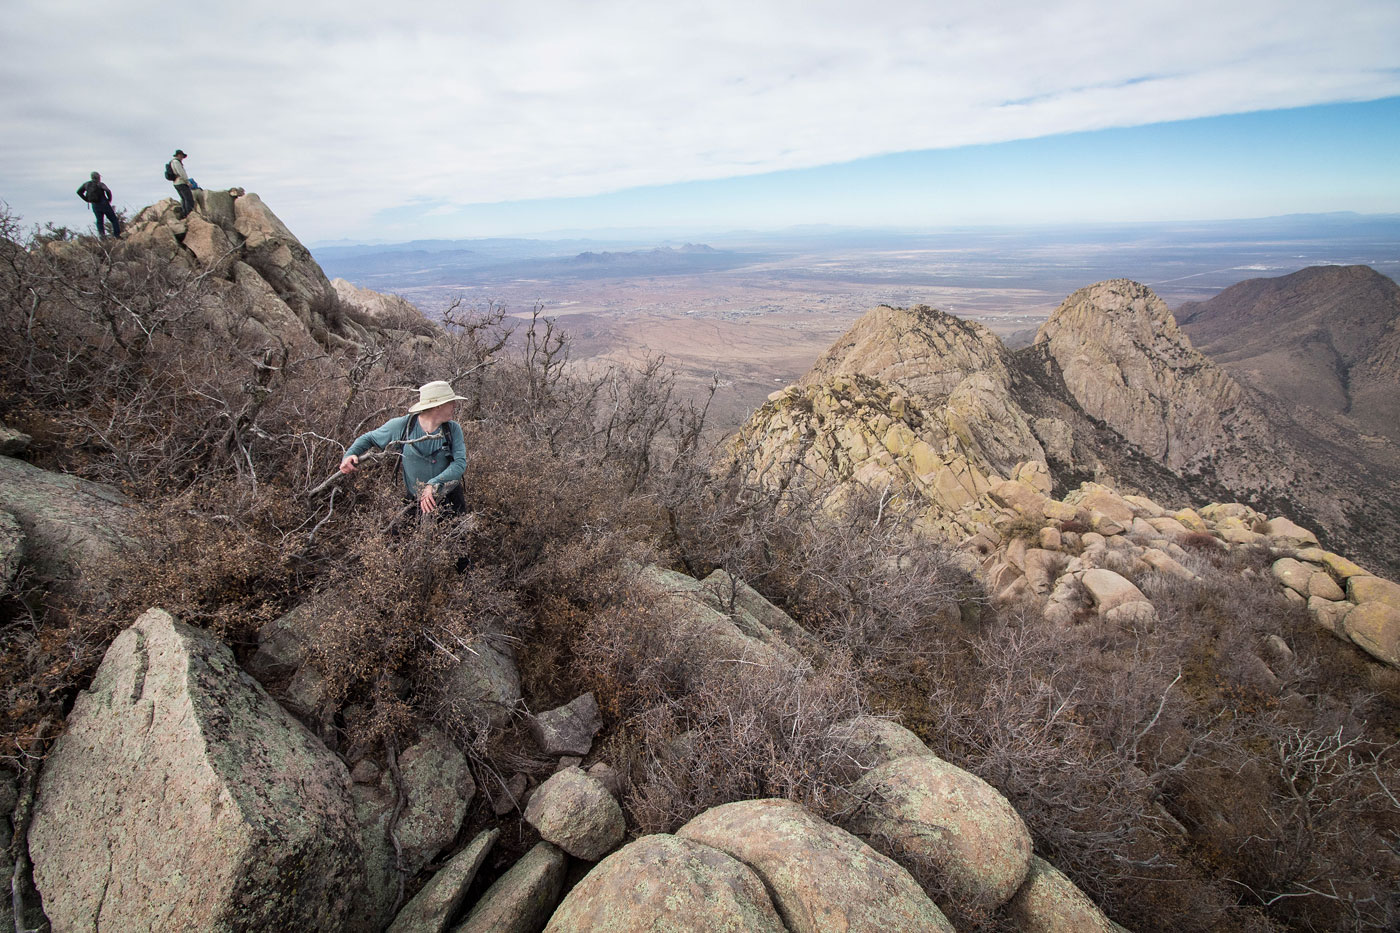 Hike Dingleberry Peak in Organ Mountains-Desert Peaks National Monument, New Mexico - Stav is Lost